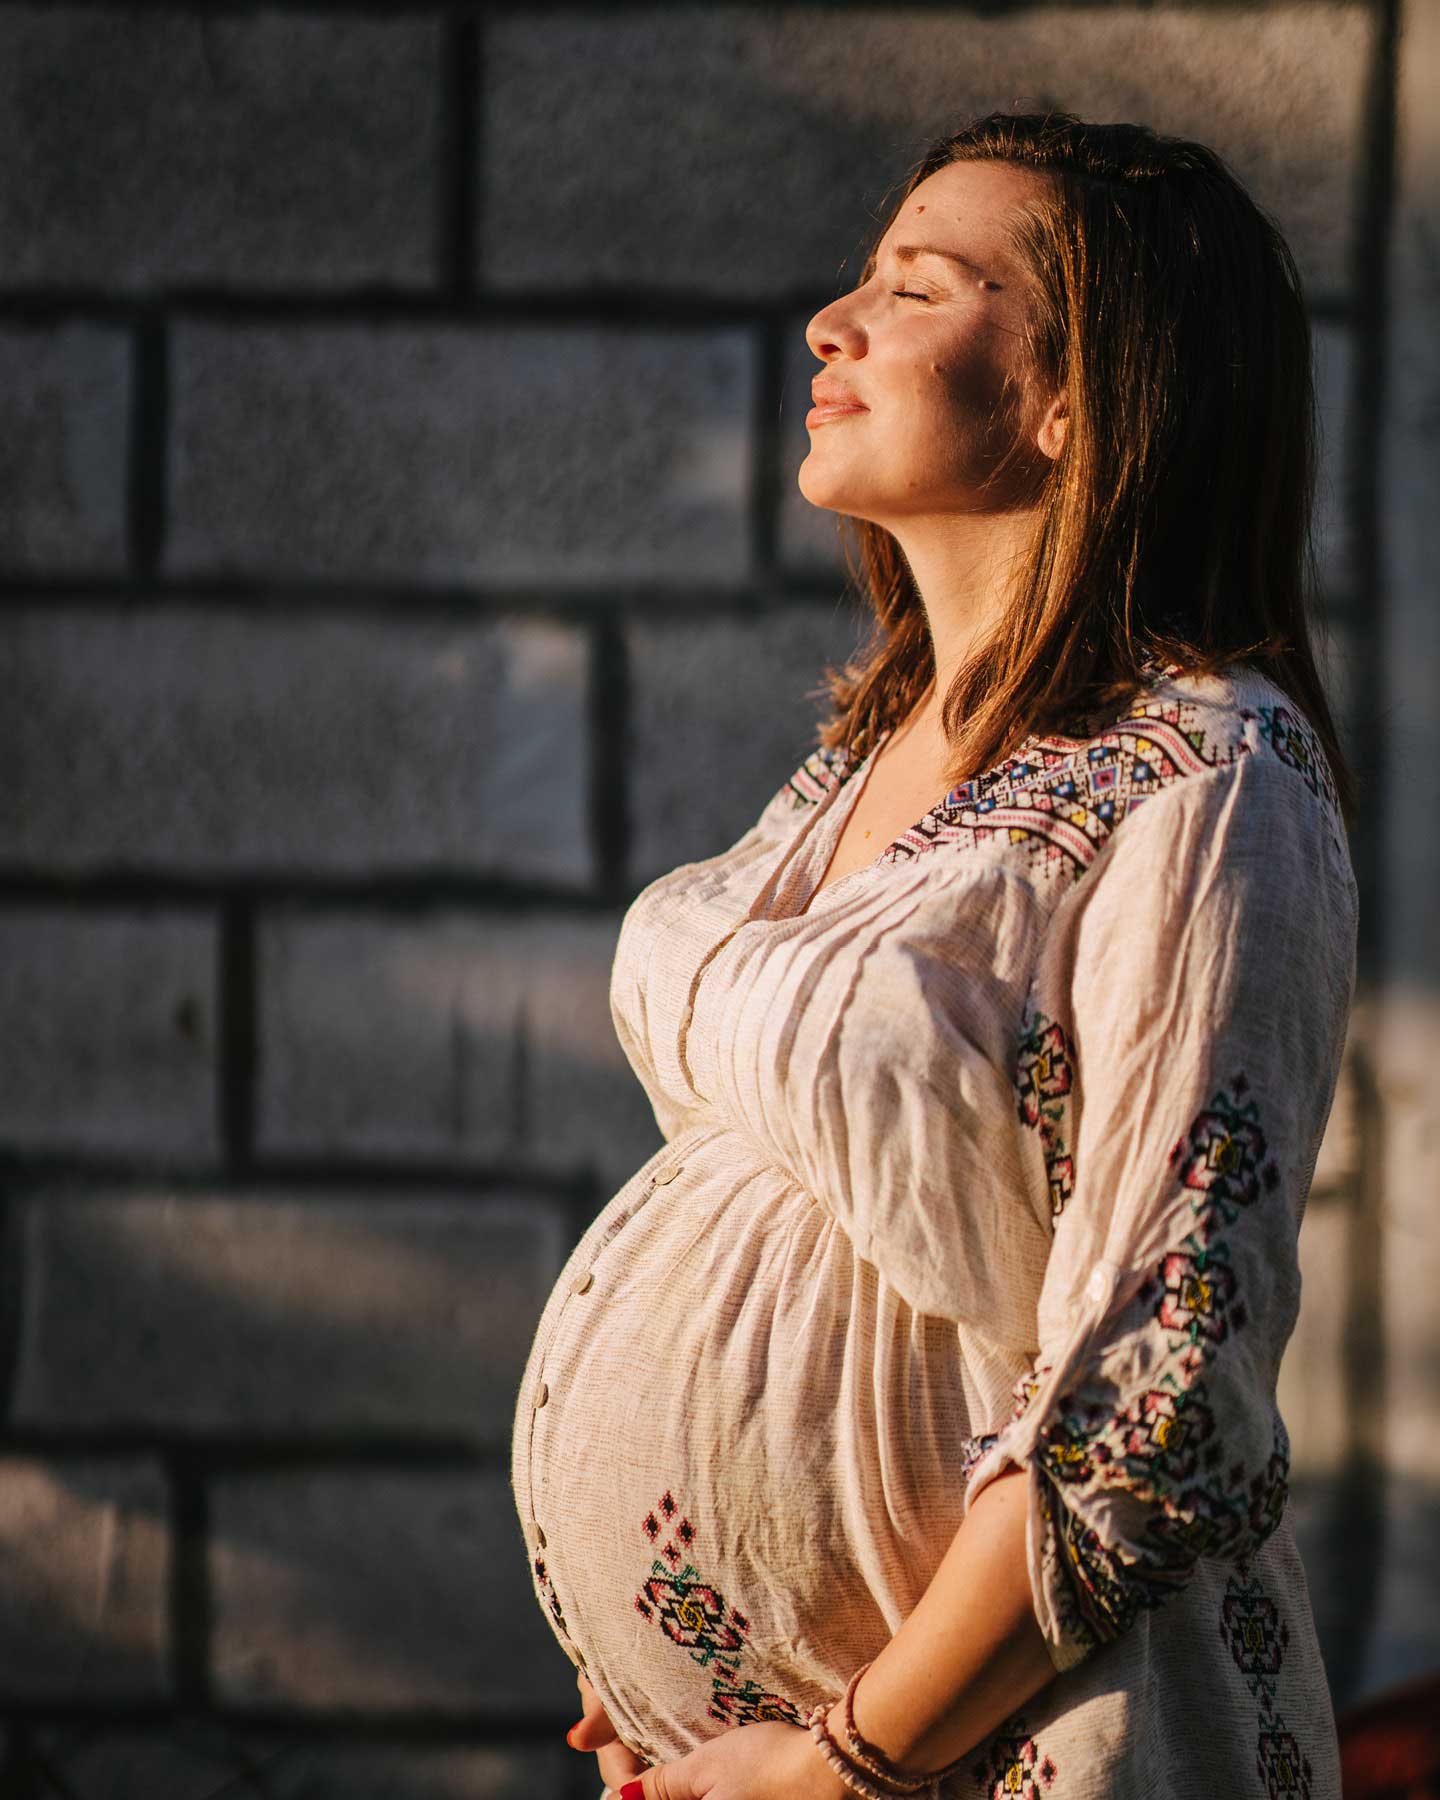 Schwangere genießt die Sonne